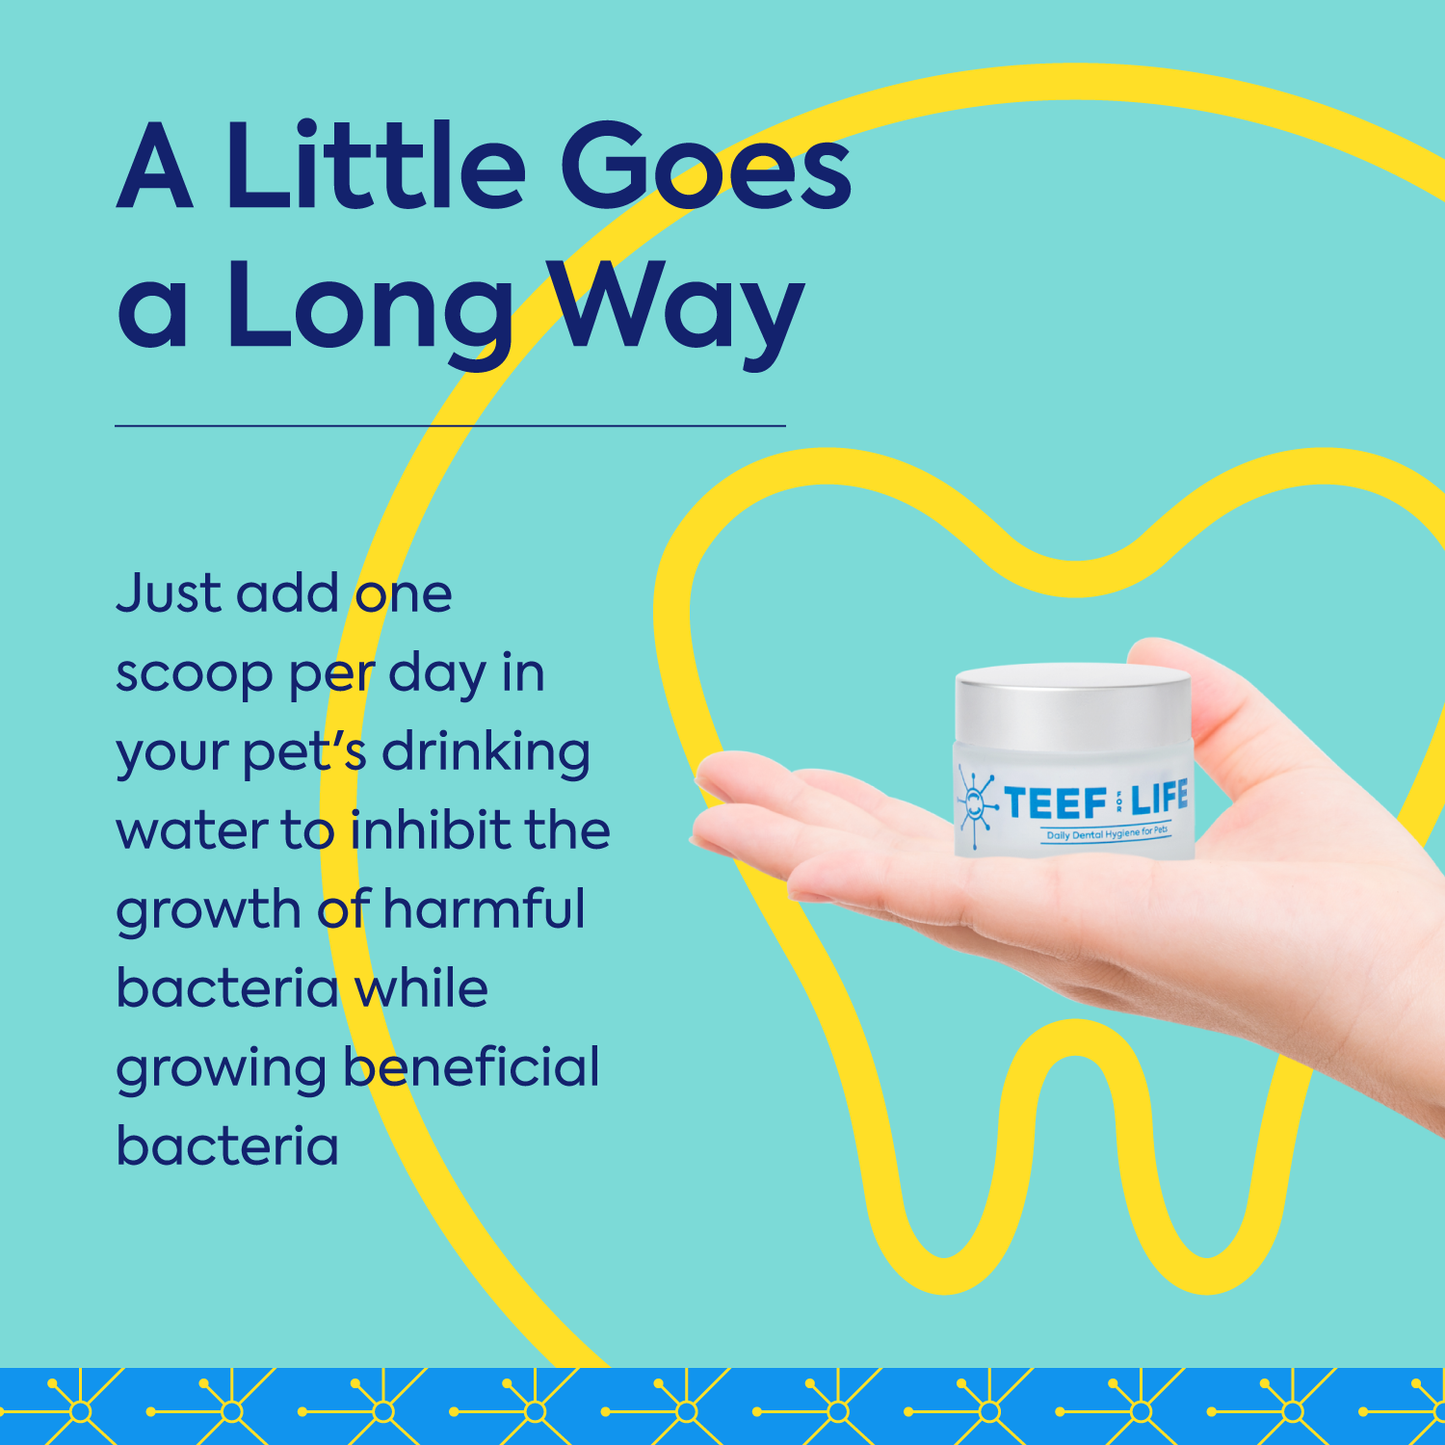 TEEF for Life - Protektin42K - Dental Kit: Prebiotic Dental Powder for ALL pets (Sodium-free)